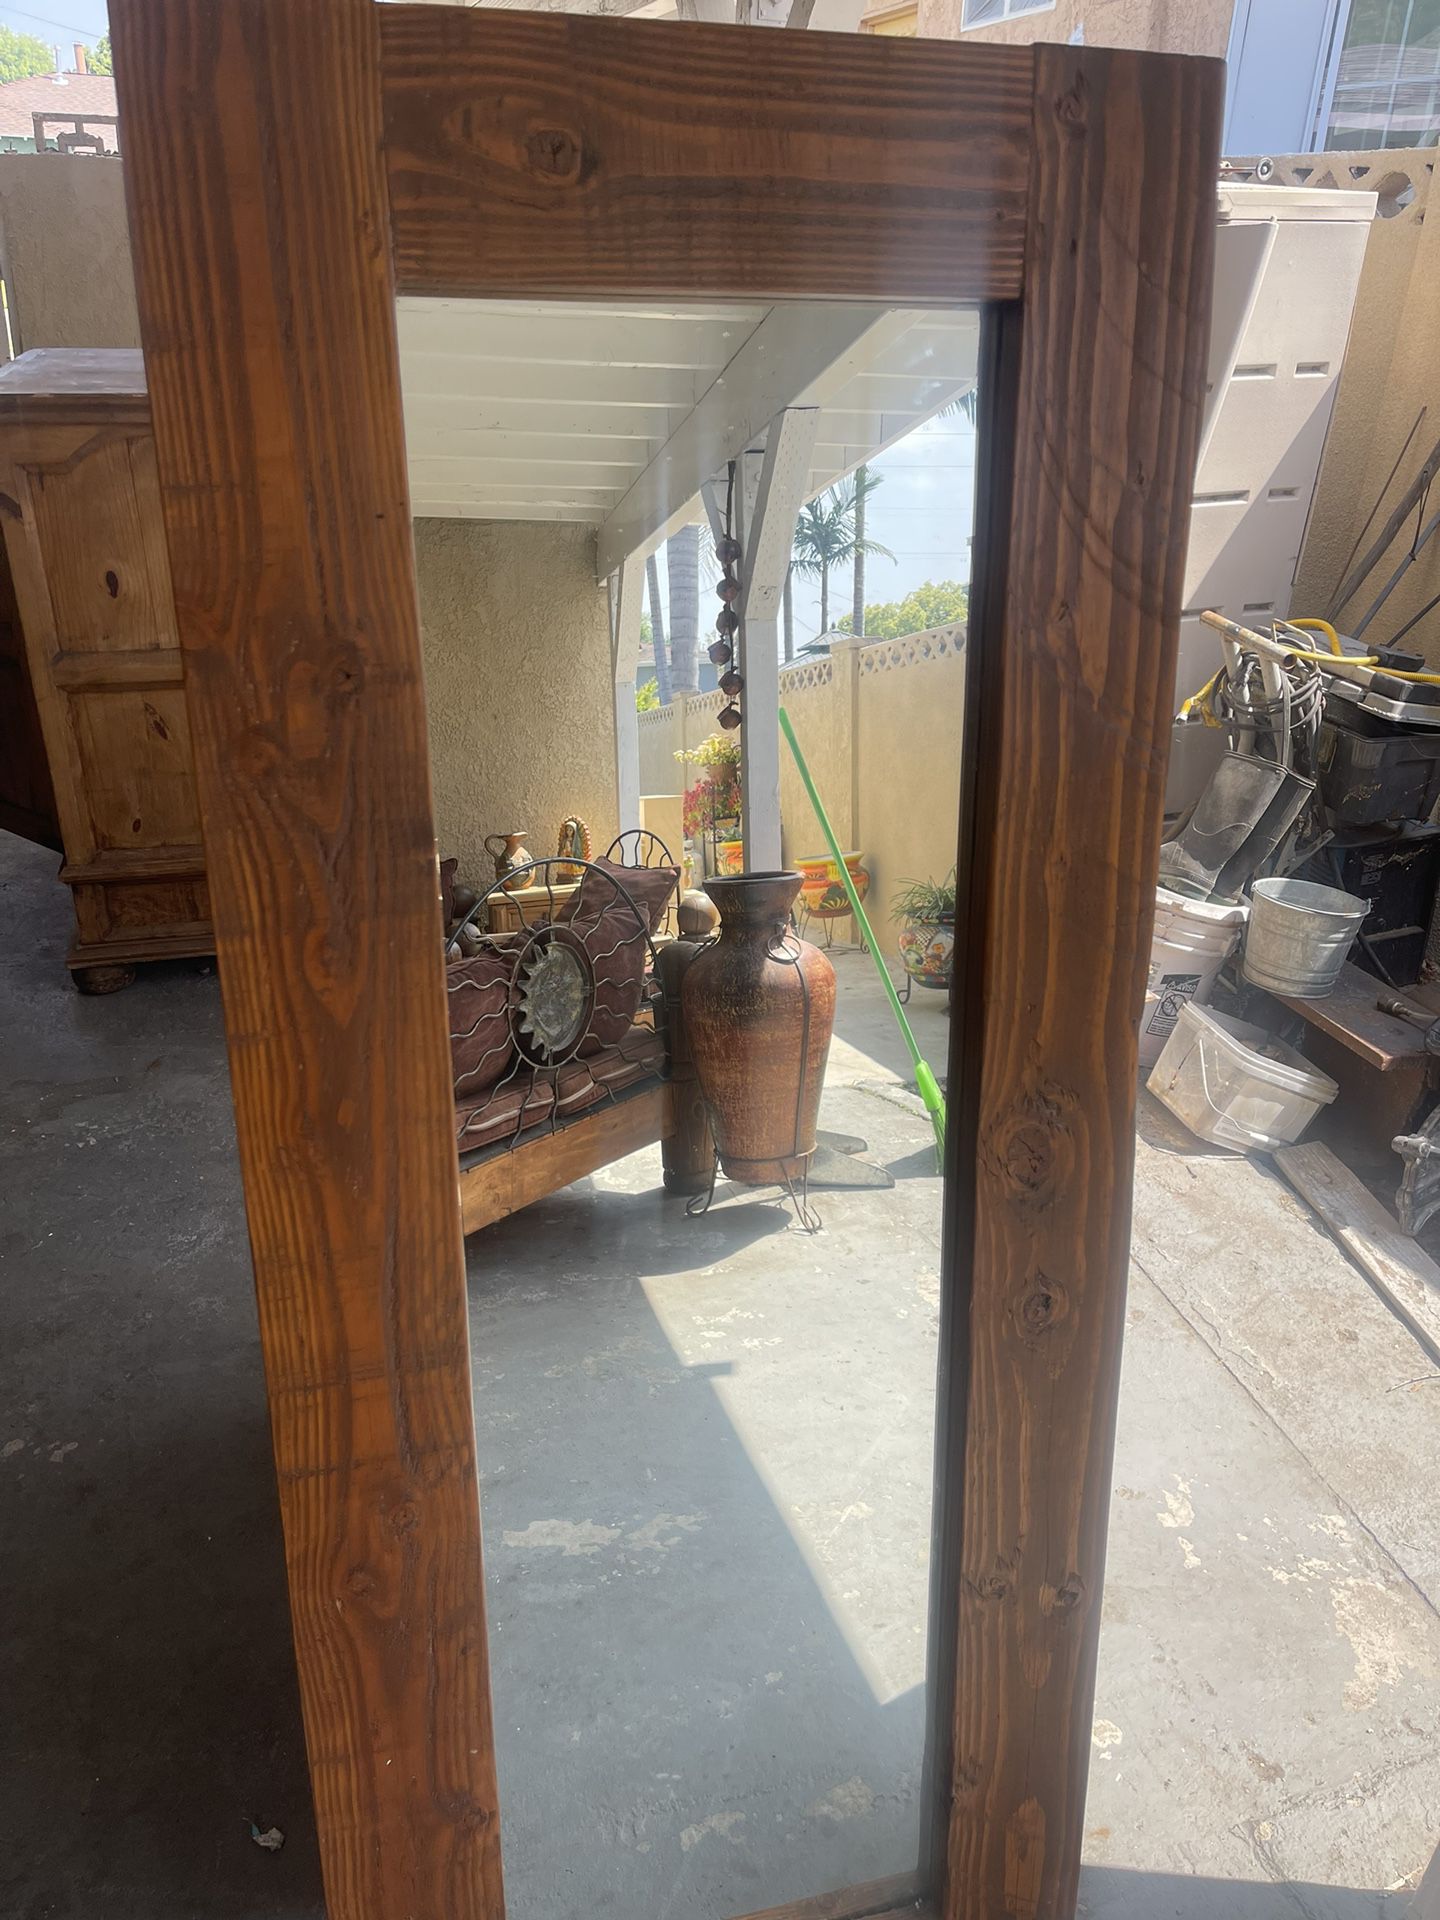 Rustic Pine Mirror